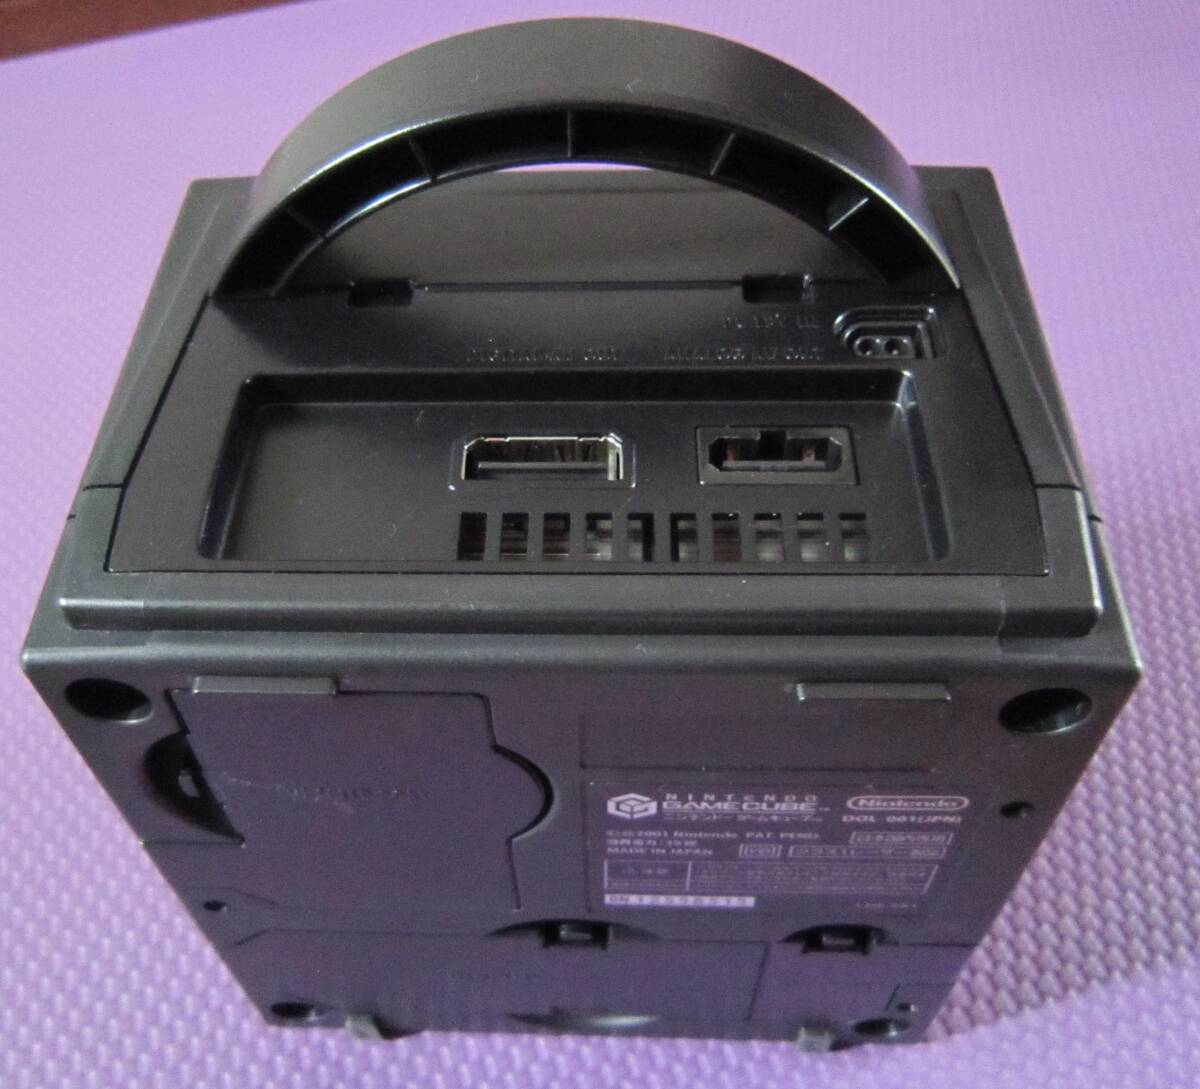  retro game machine Game Cube GAMECUBE PlayStation PlayStation Super Famicom SFC controller set 